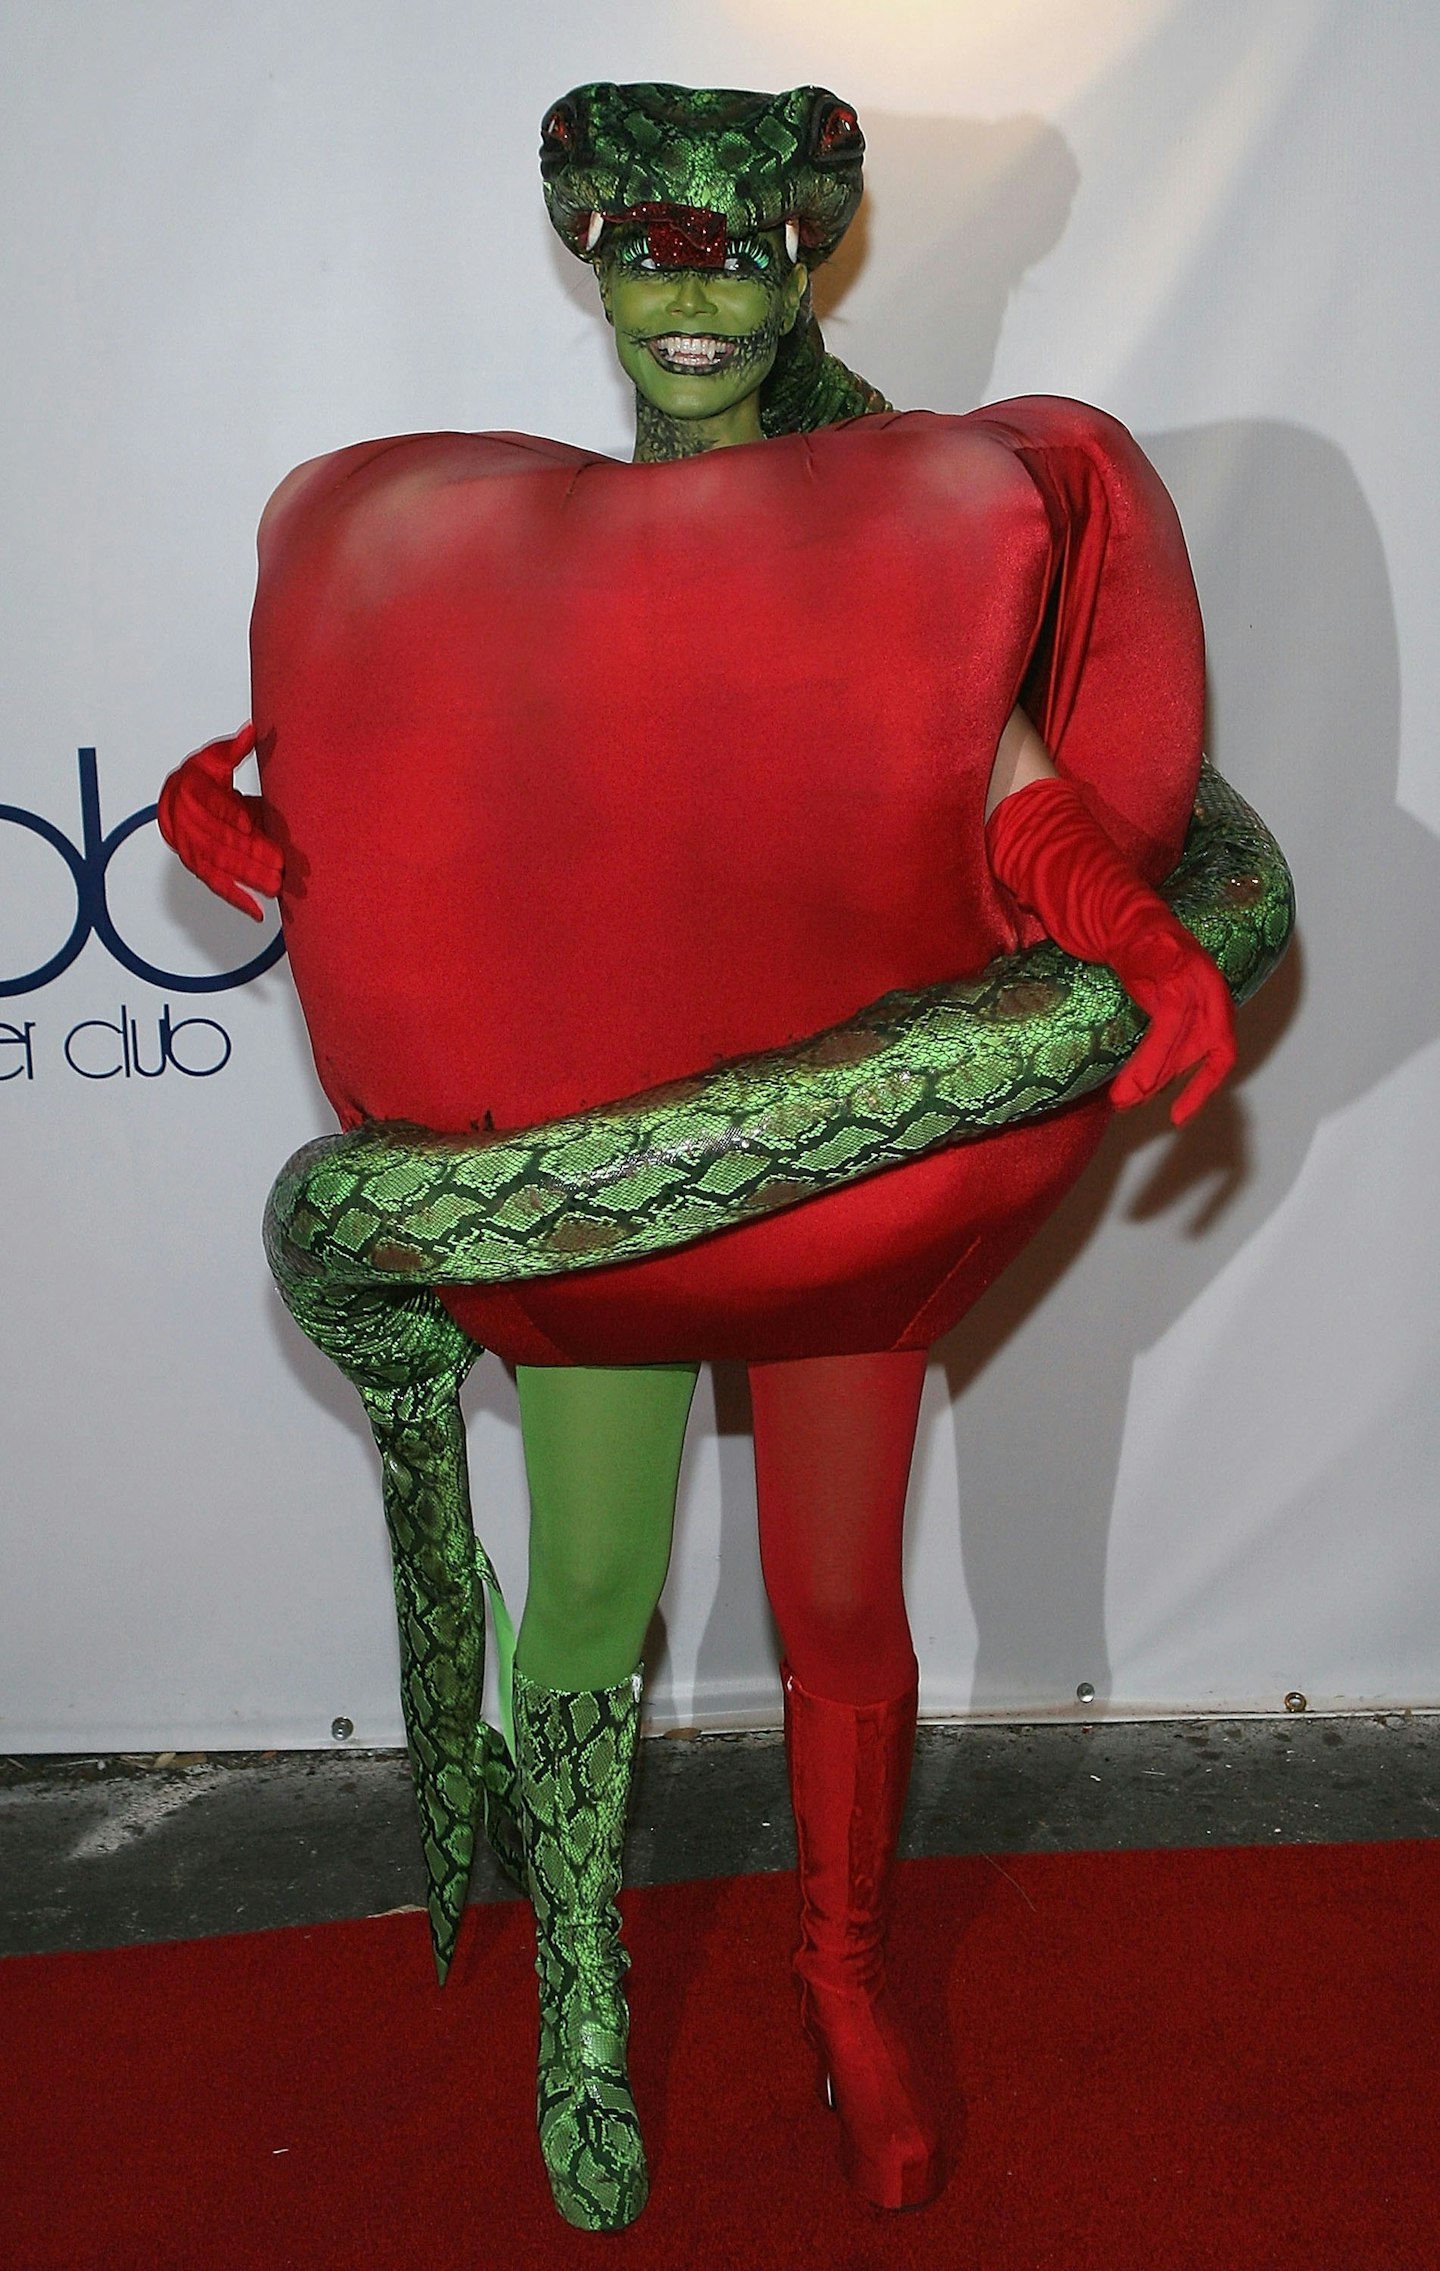 Heidi Klum Halloween outfit